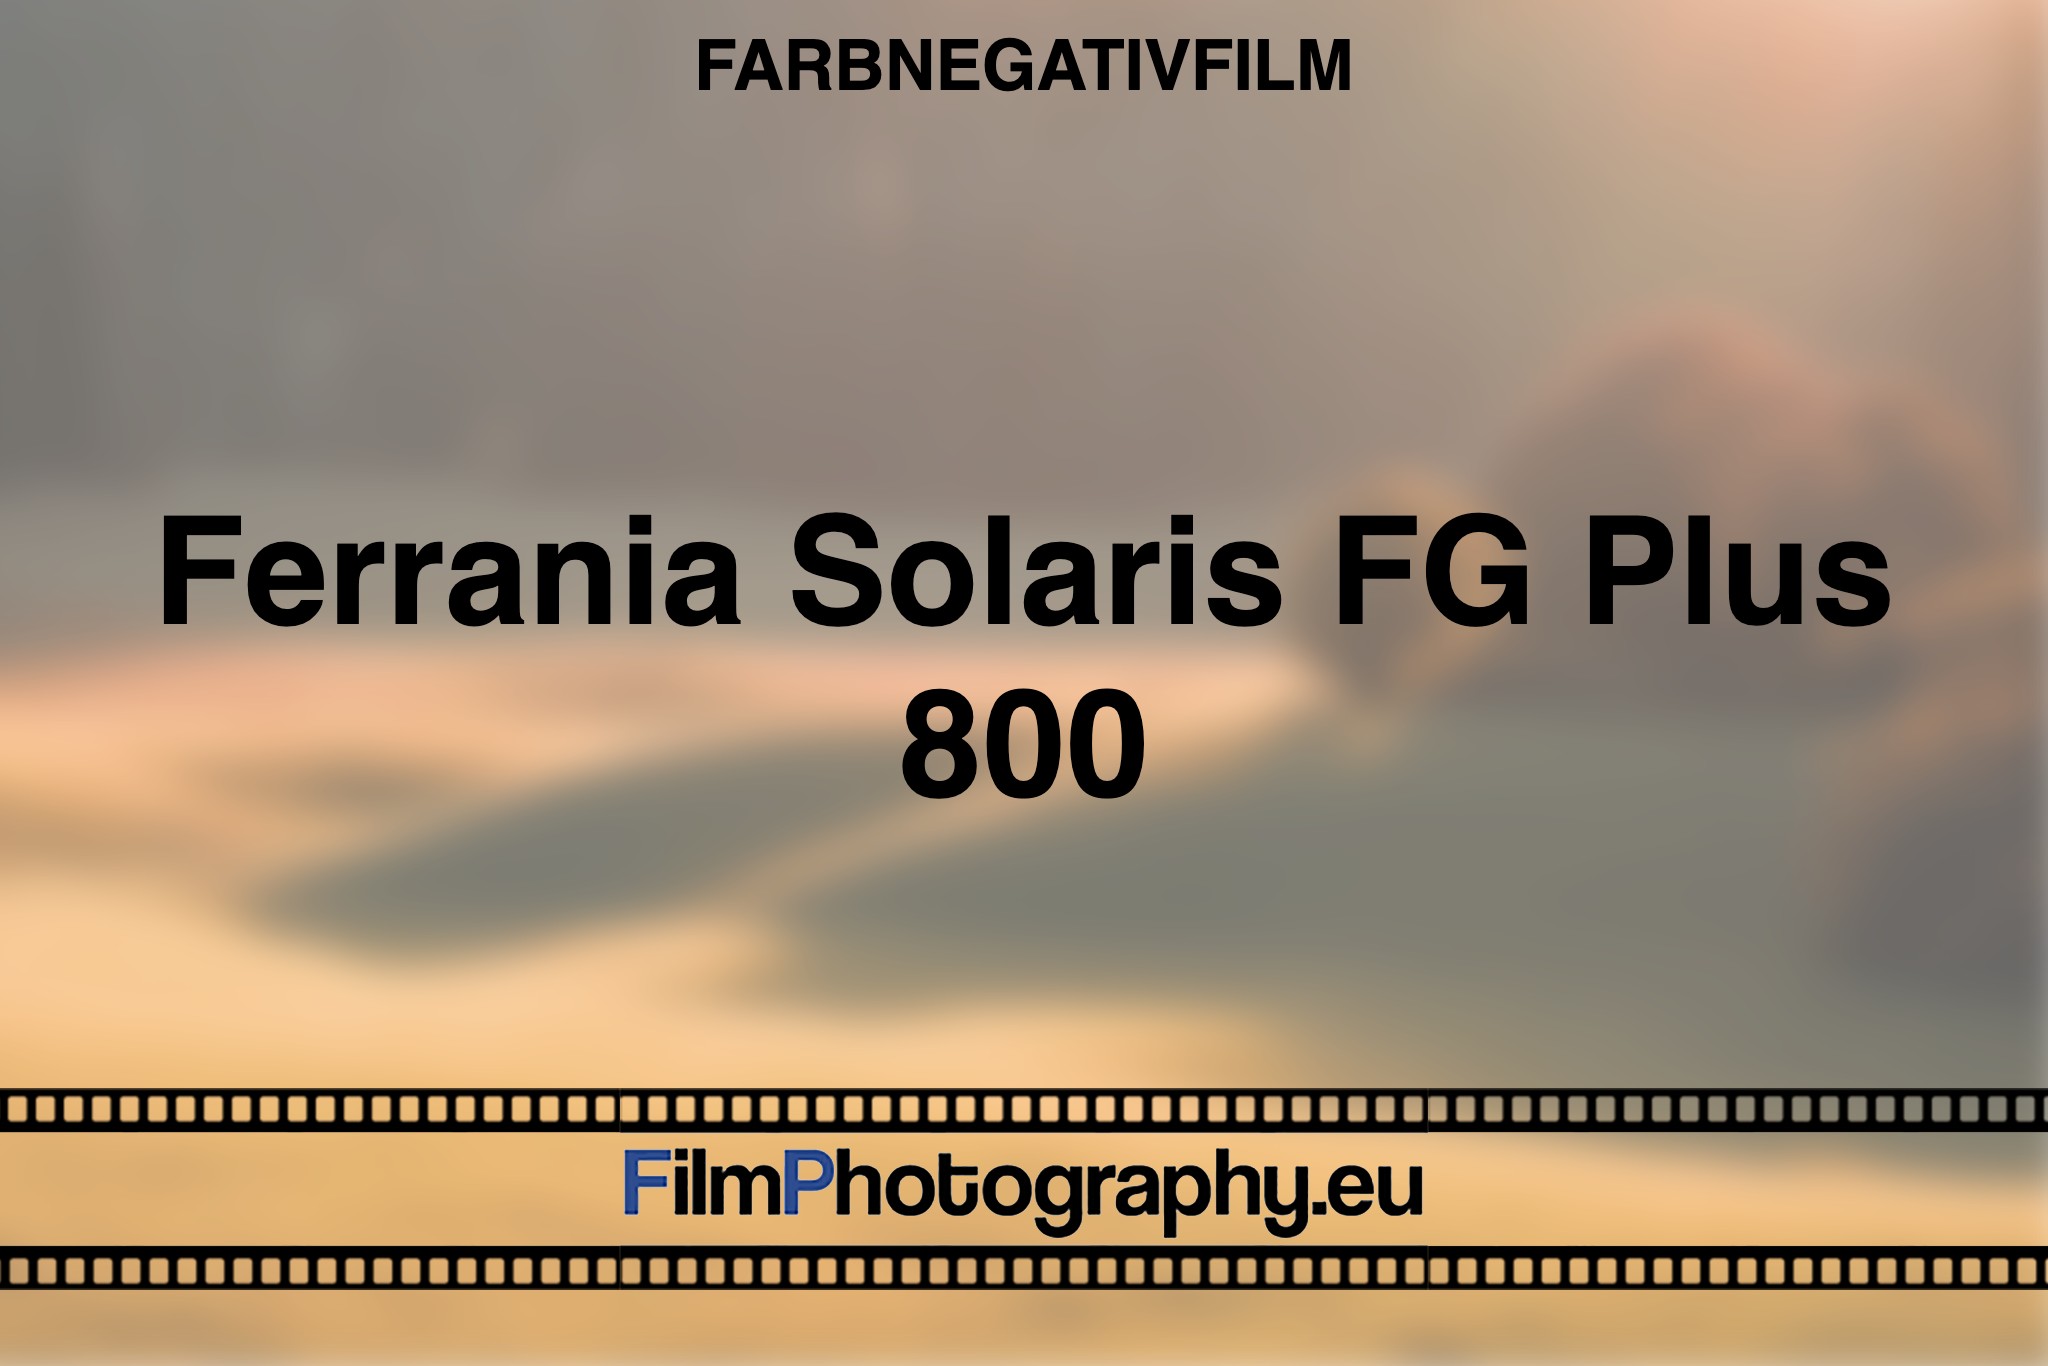 ferrania-solaris-fg-plus-800-farbnegativfilm-bnv